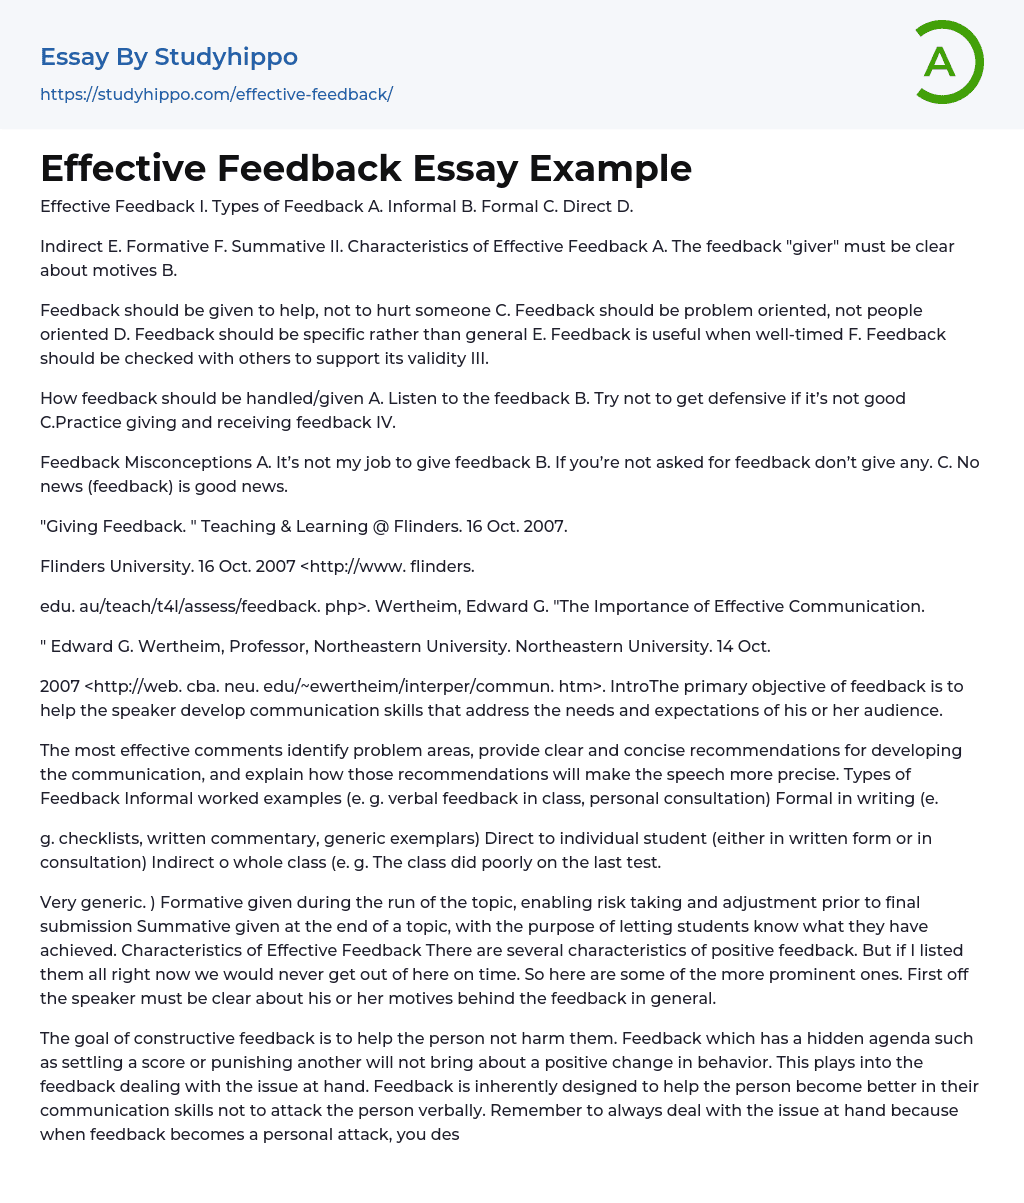 where can i get feedback on my essay